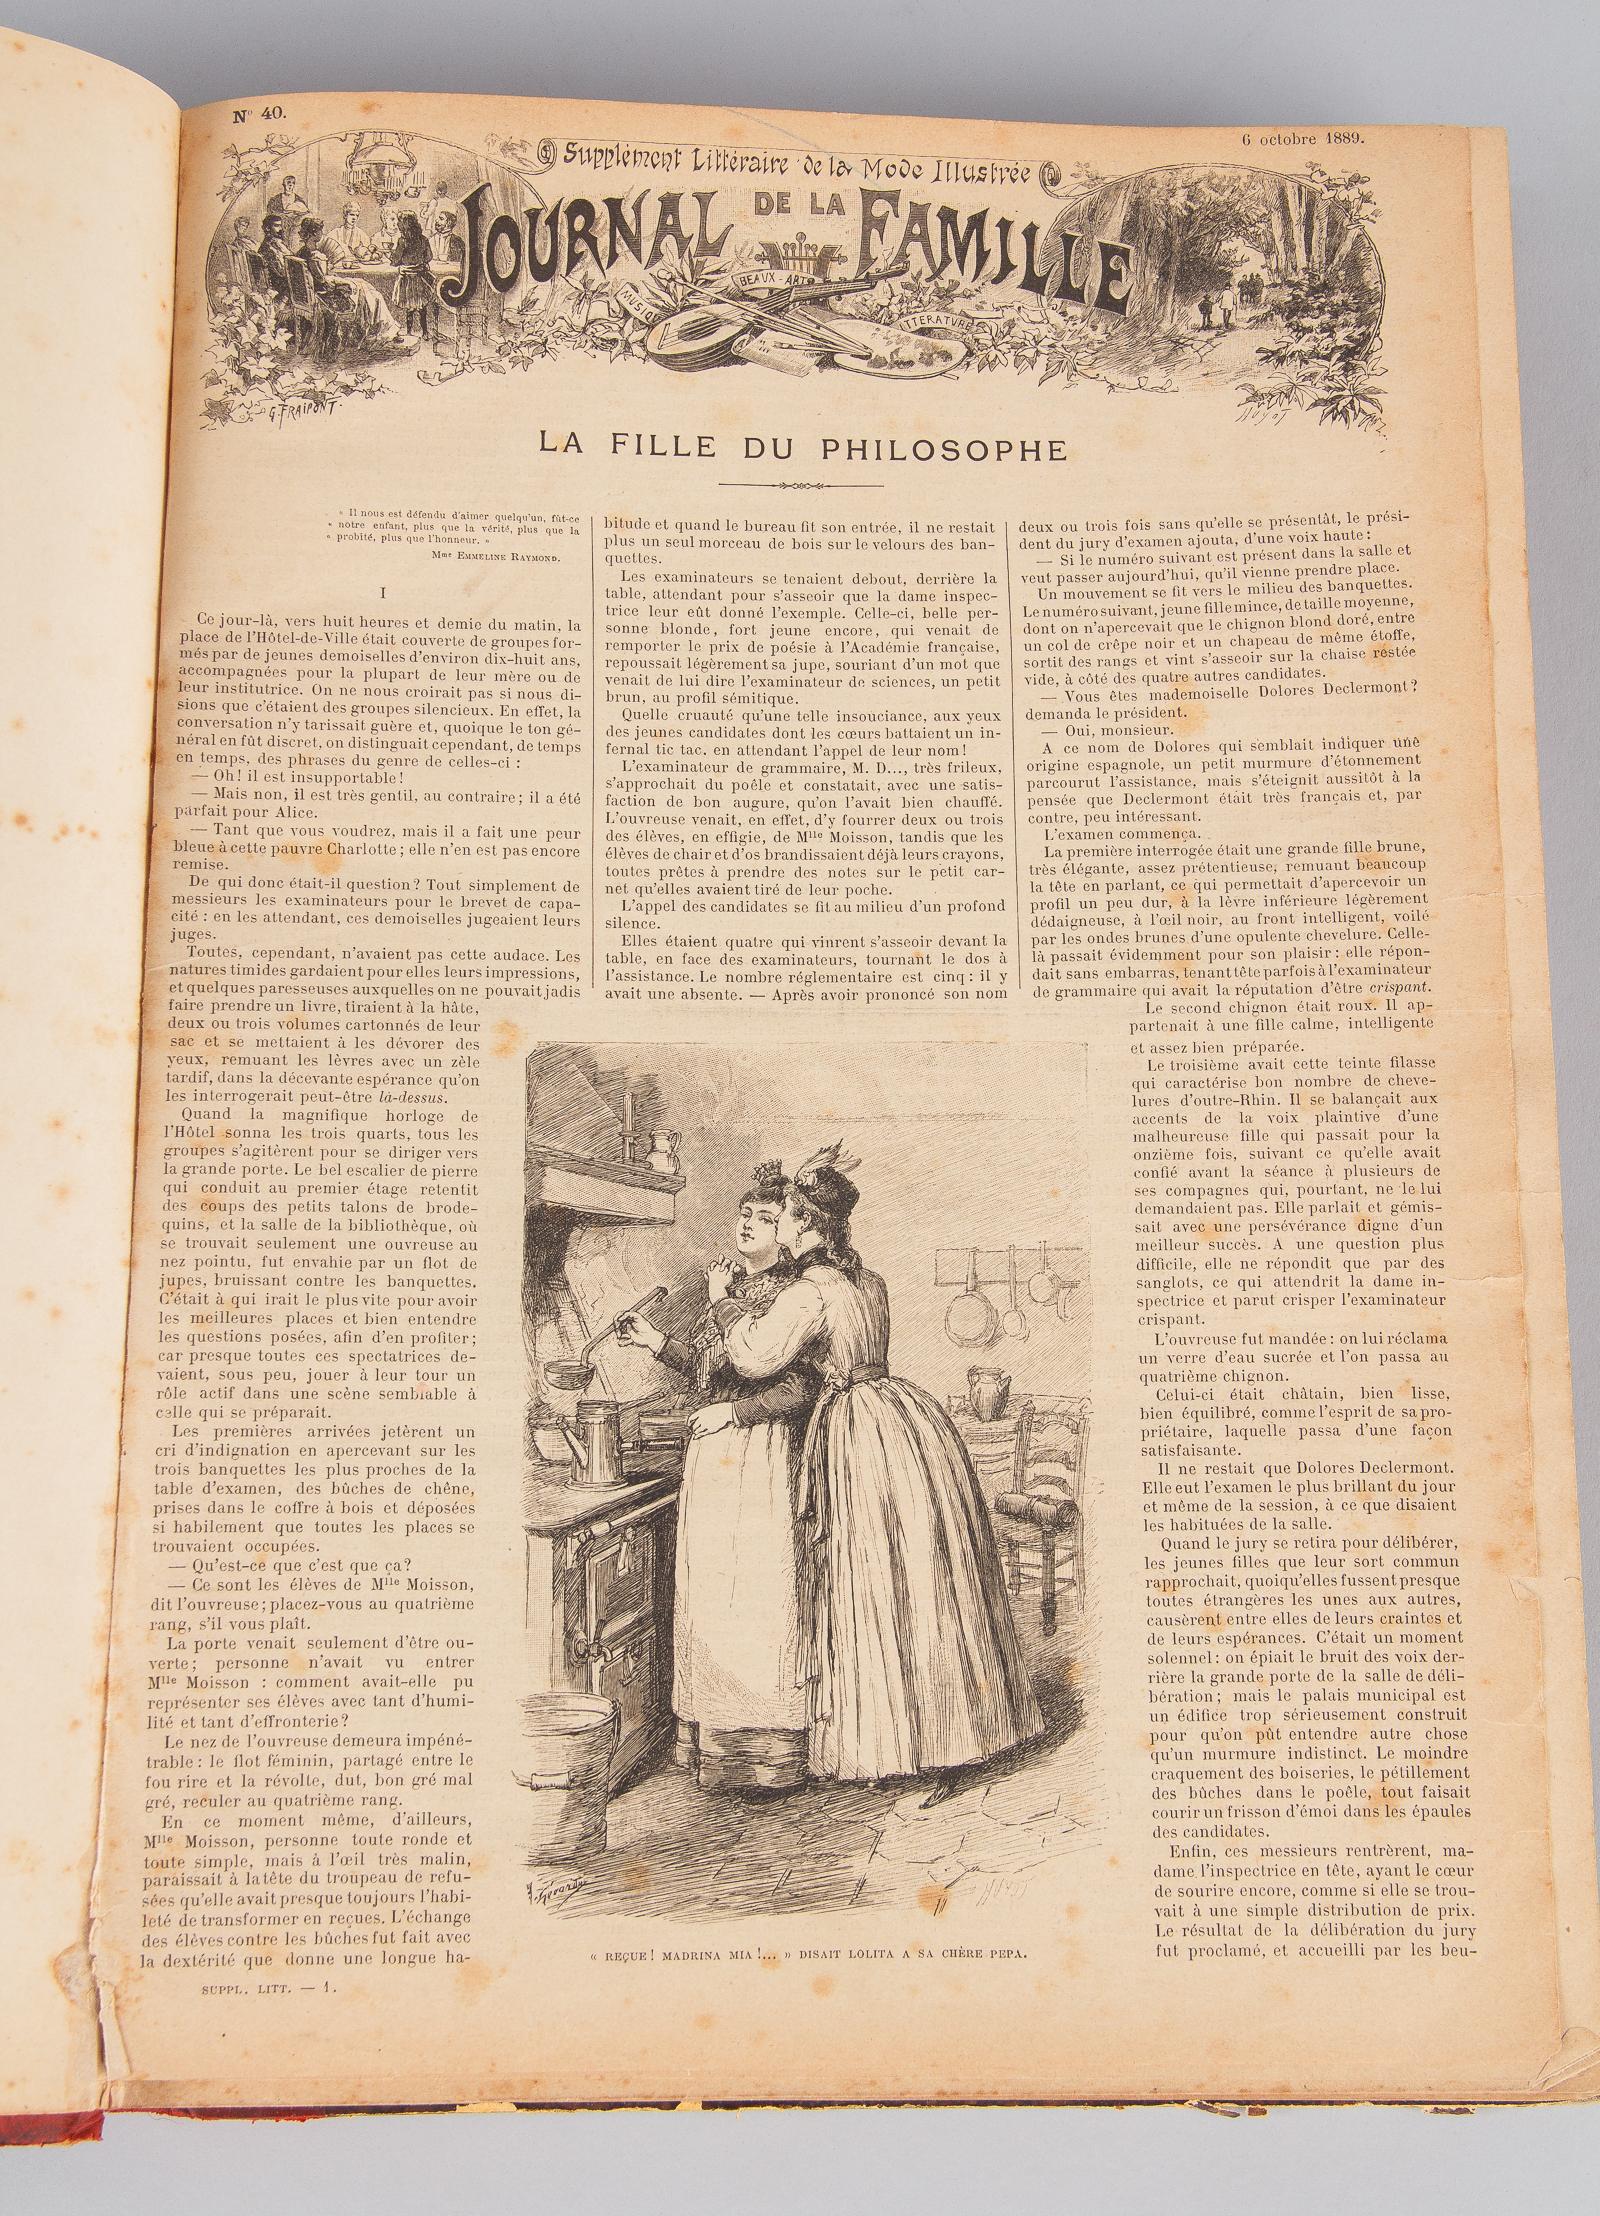 19th Century French Book, La Mode Illustree-Journal de la Famille, 1889-1893